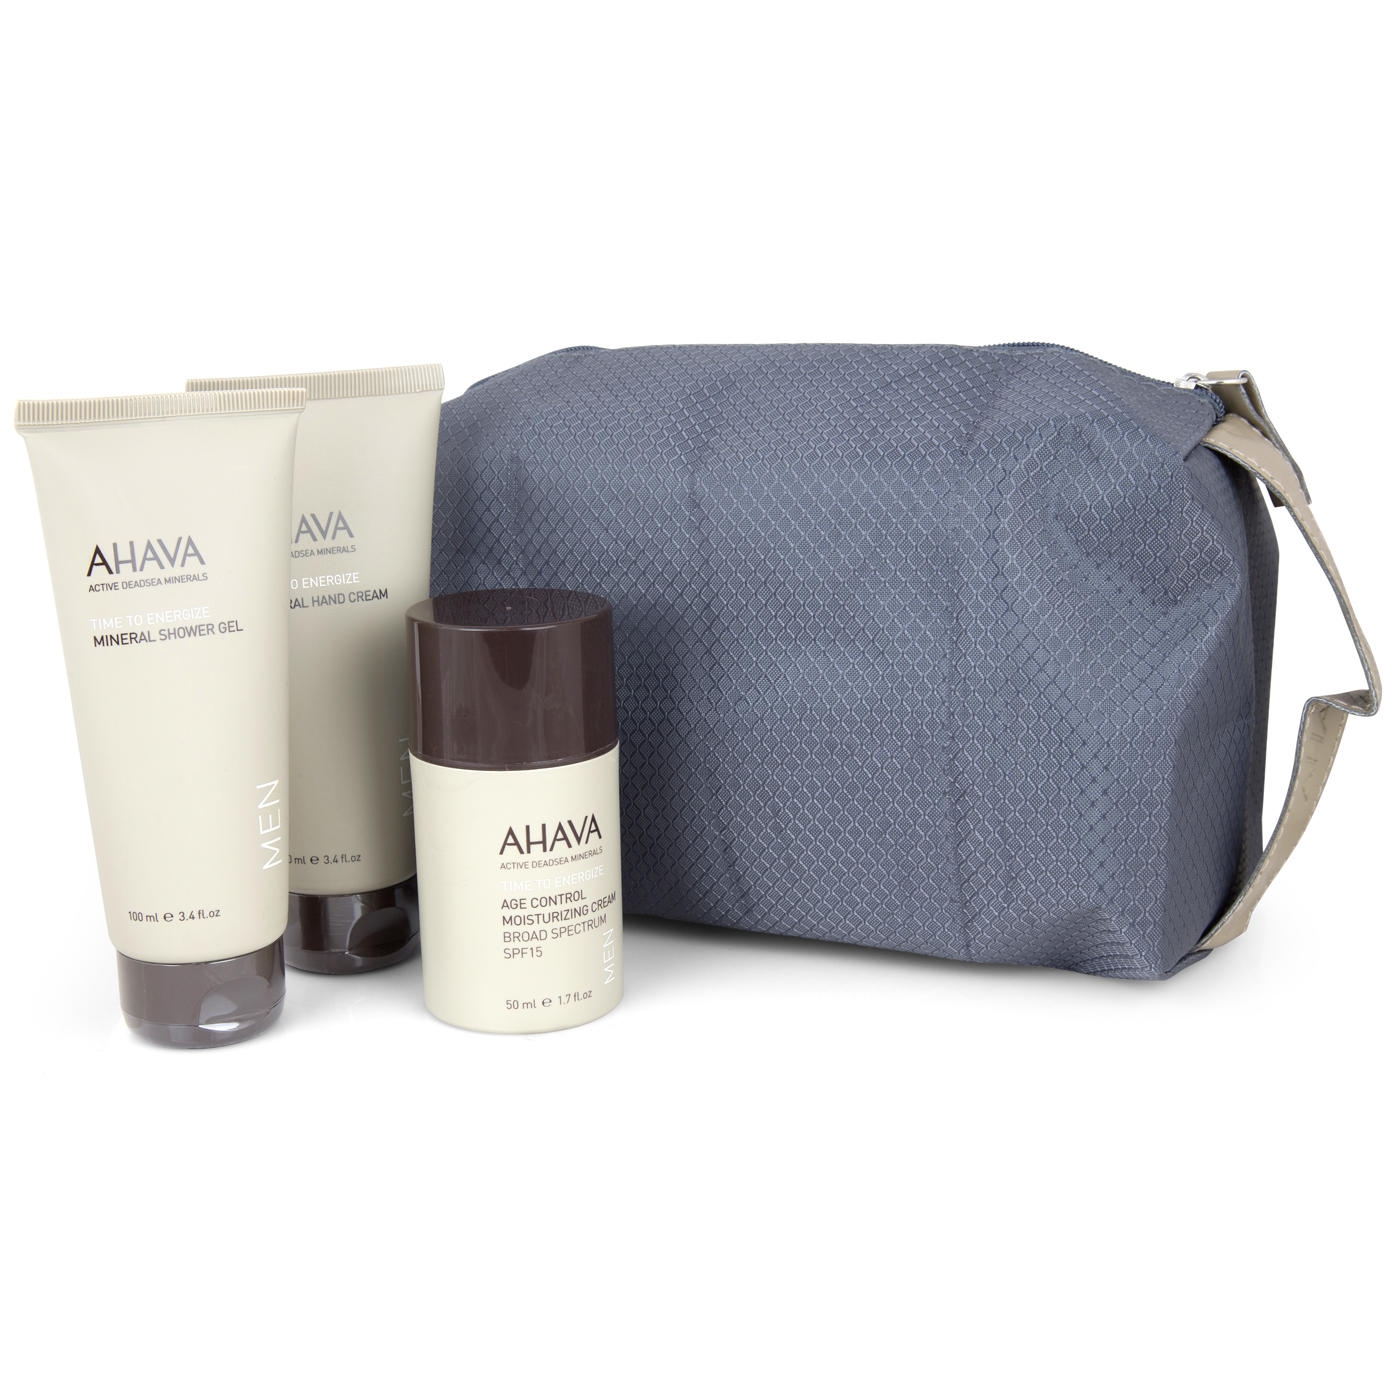 AHAVA Triple Face and Body Treatment Kit For Men: Age Control Moisturizing Cream SPF 15, Mineral Shower Gel, Hand Cream - 1